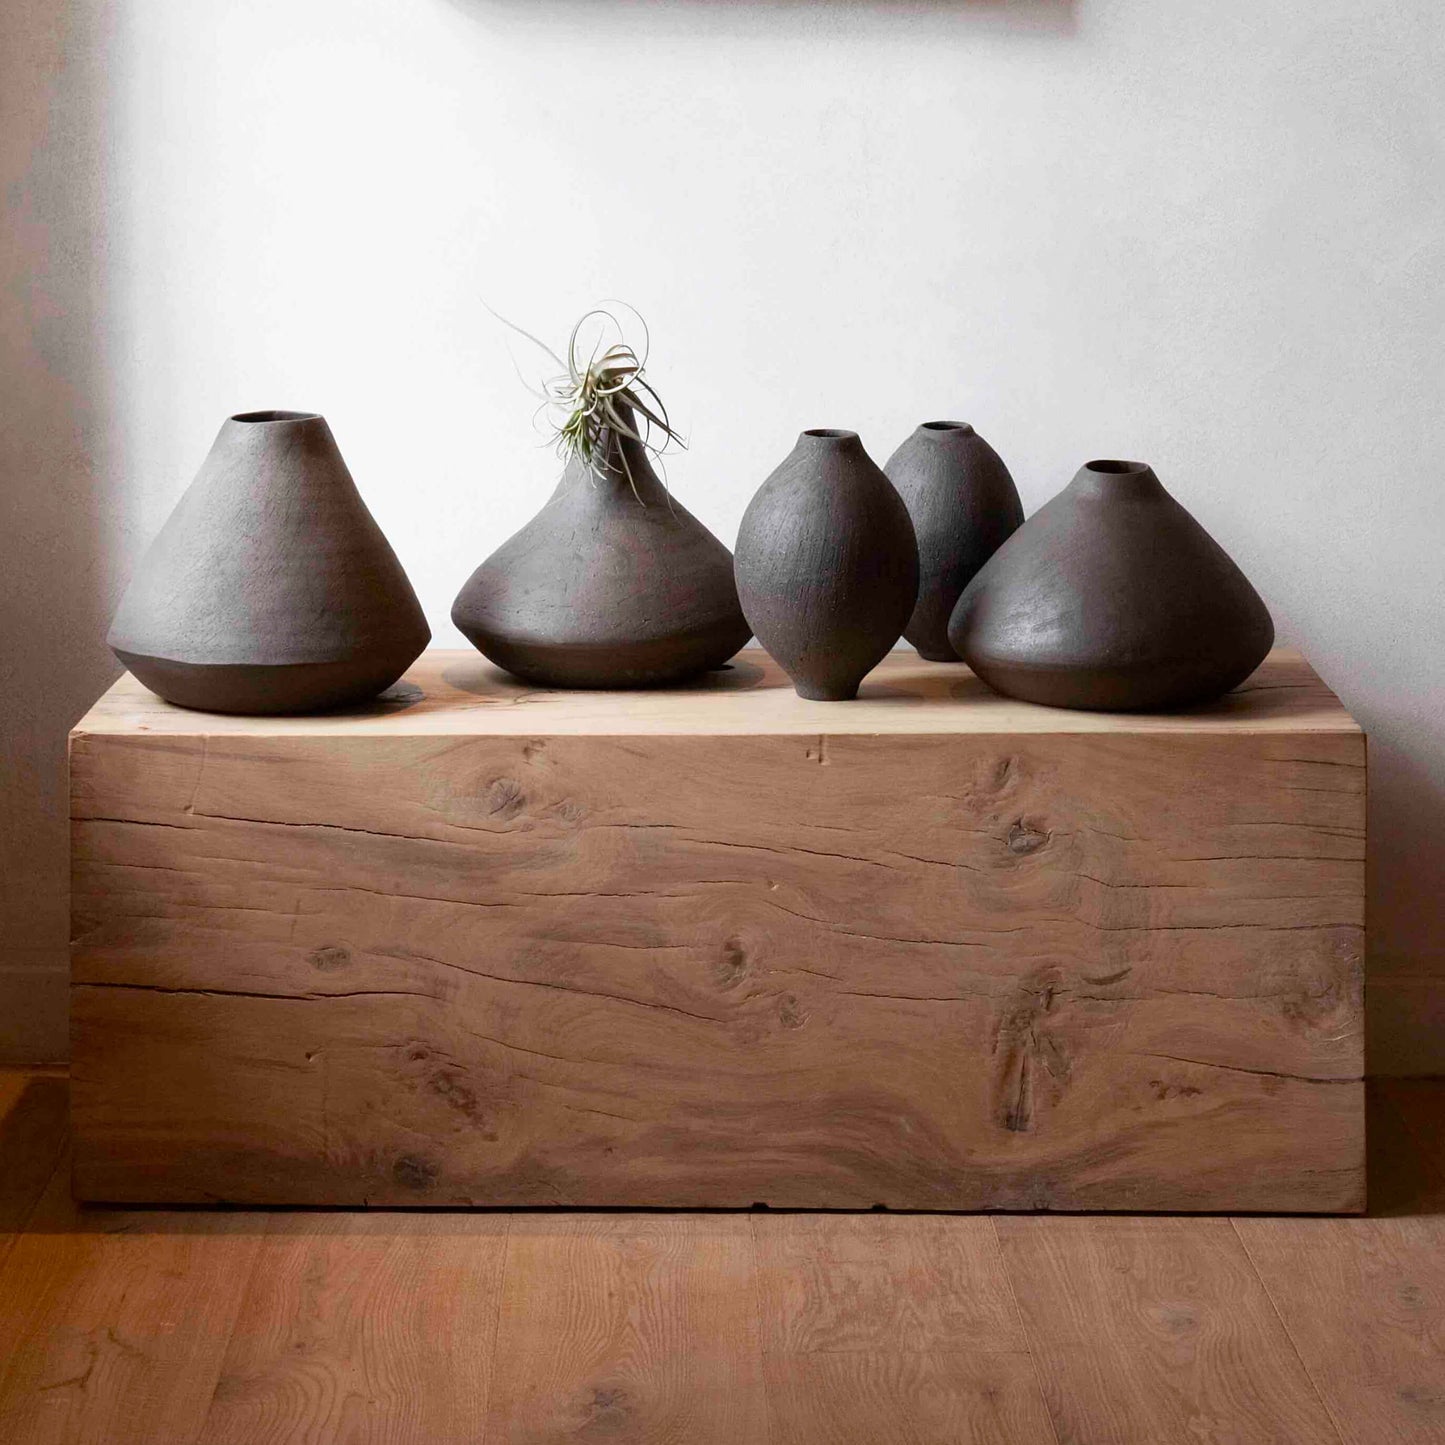 Group of black ceramic decor vessels